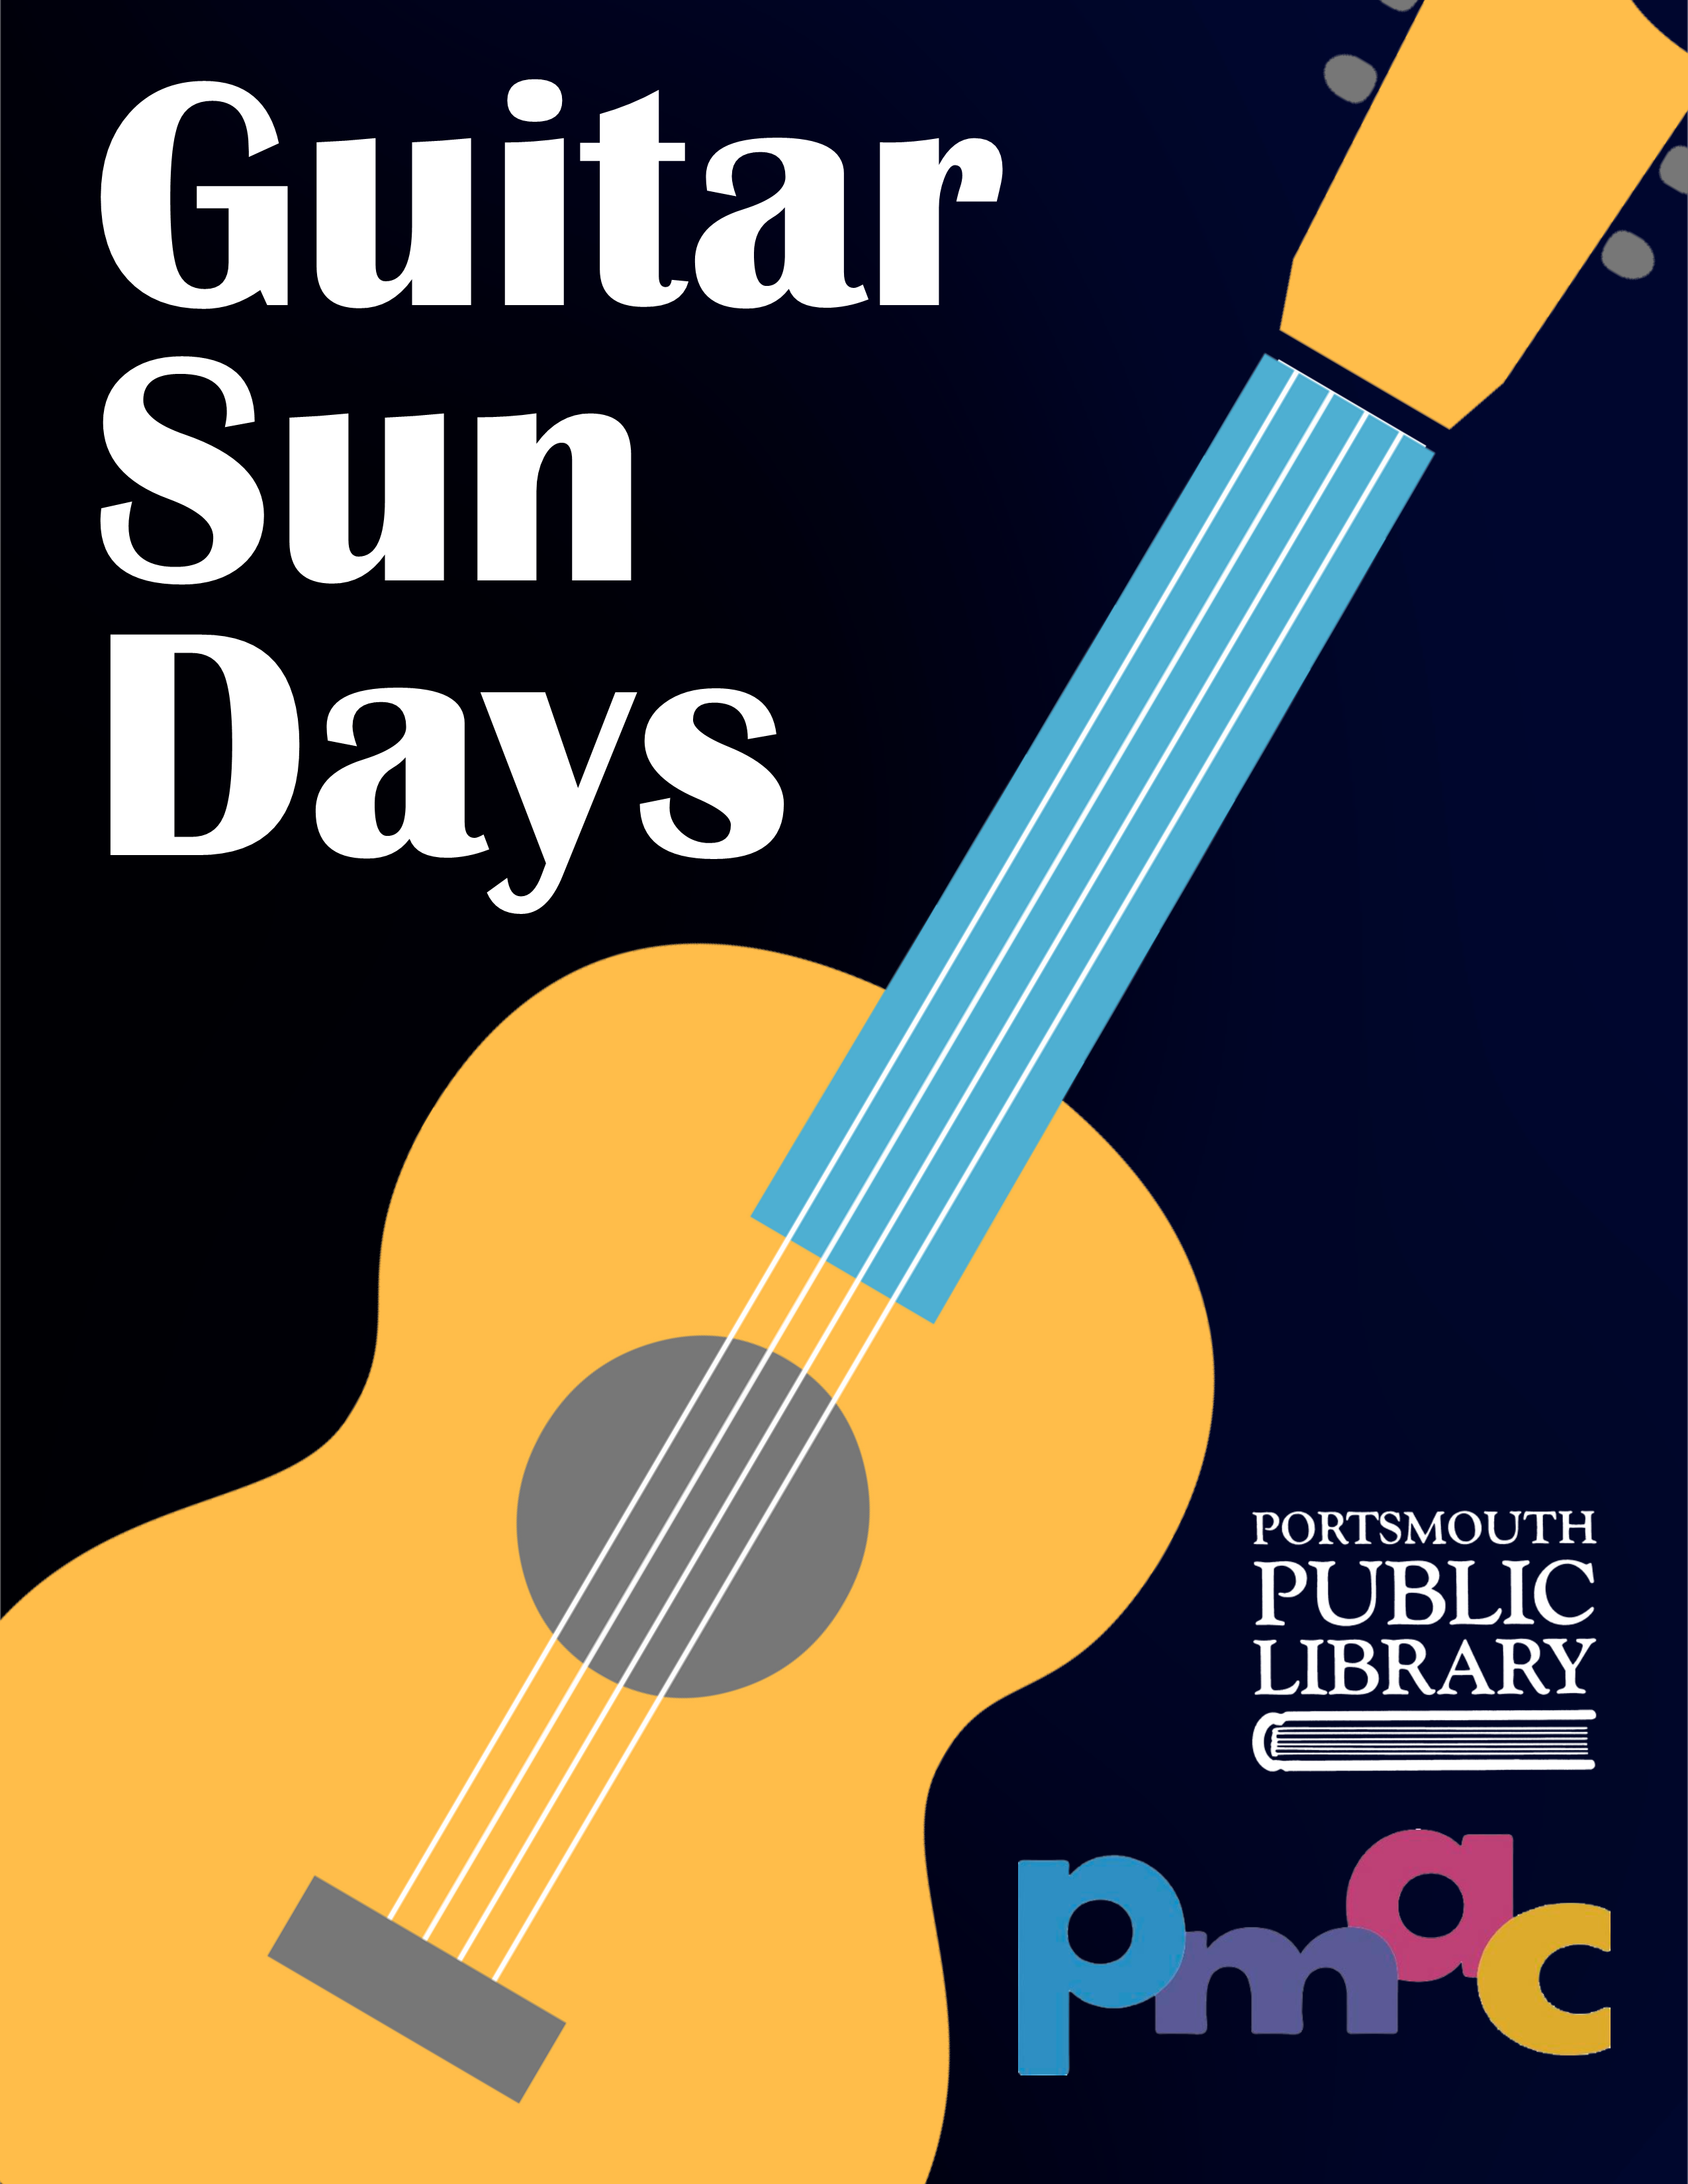 Guitar Sundays PMAC Portsmouth Public Library